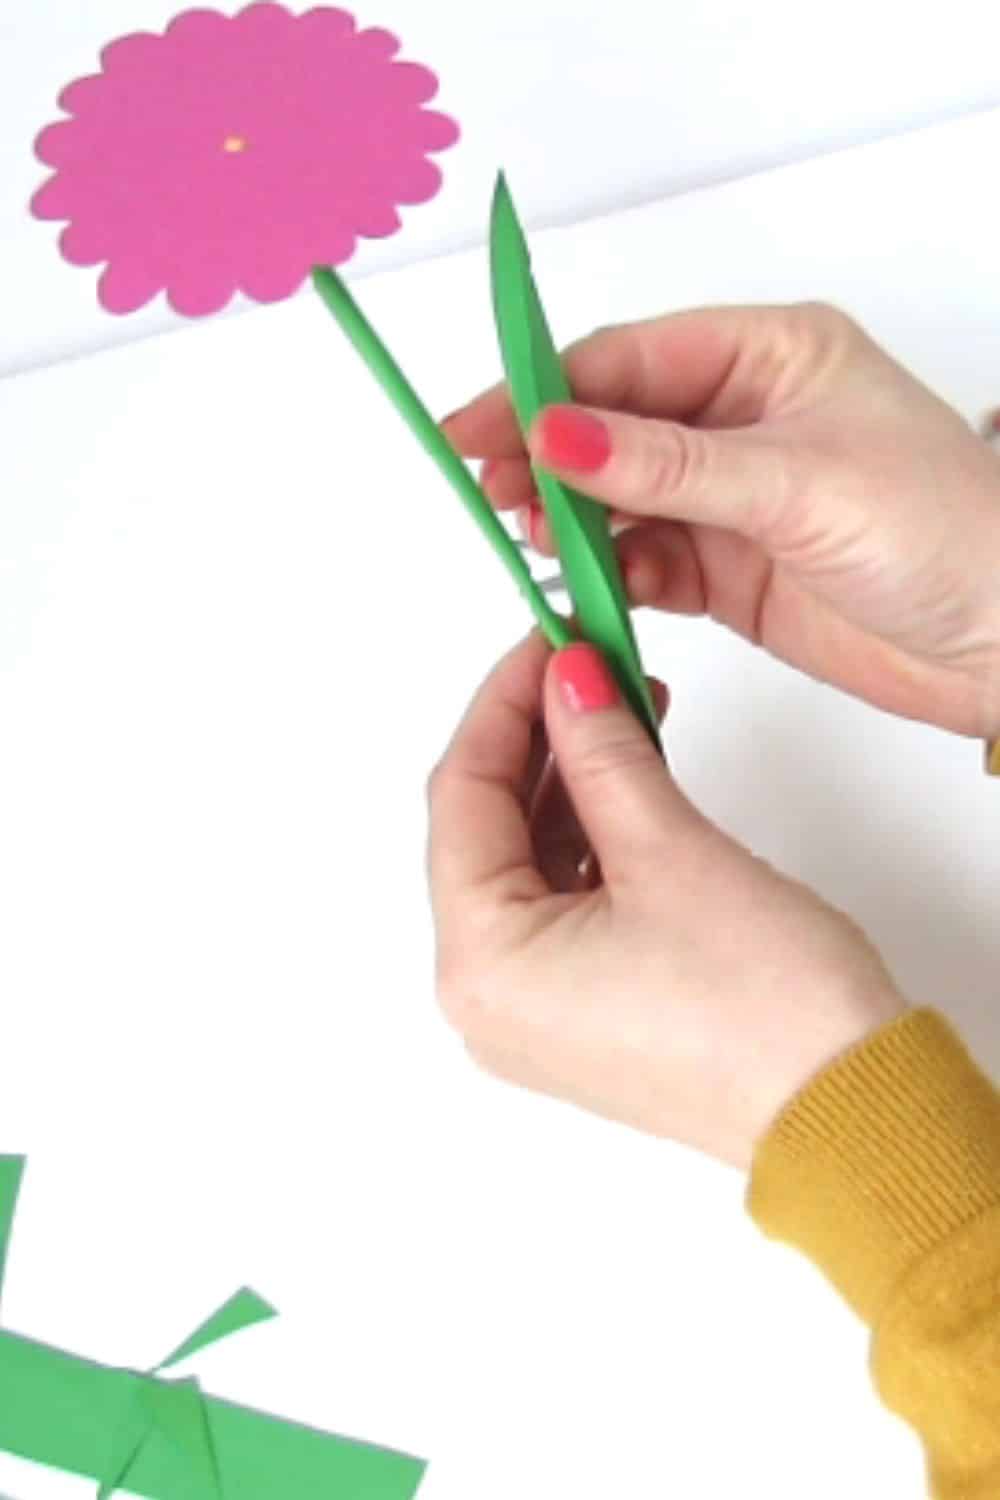 make a leaf for the paper flower